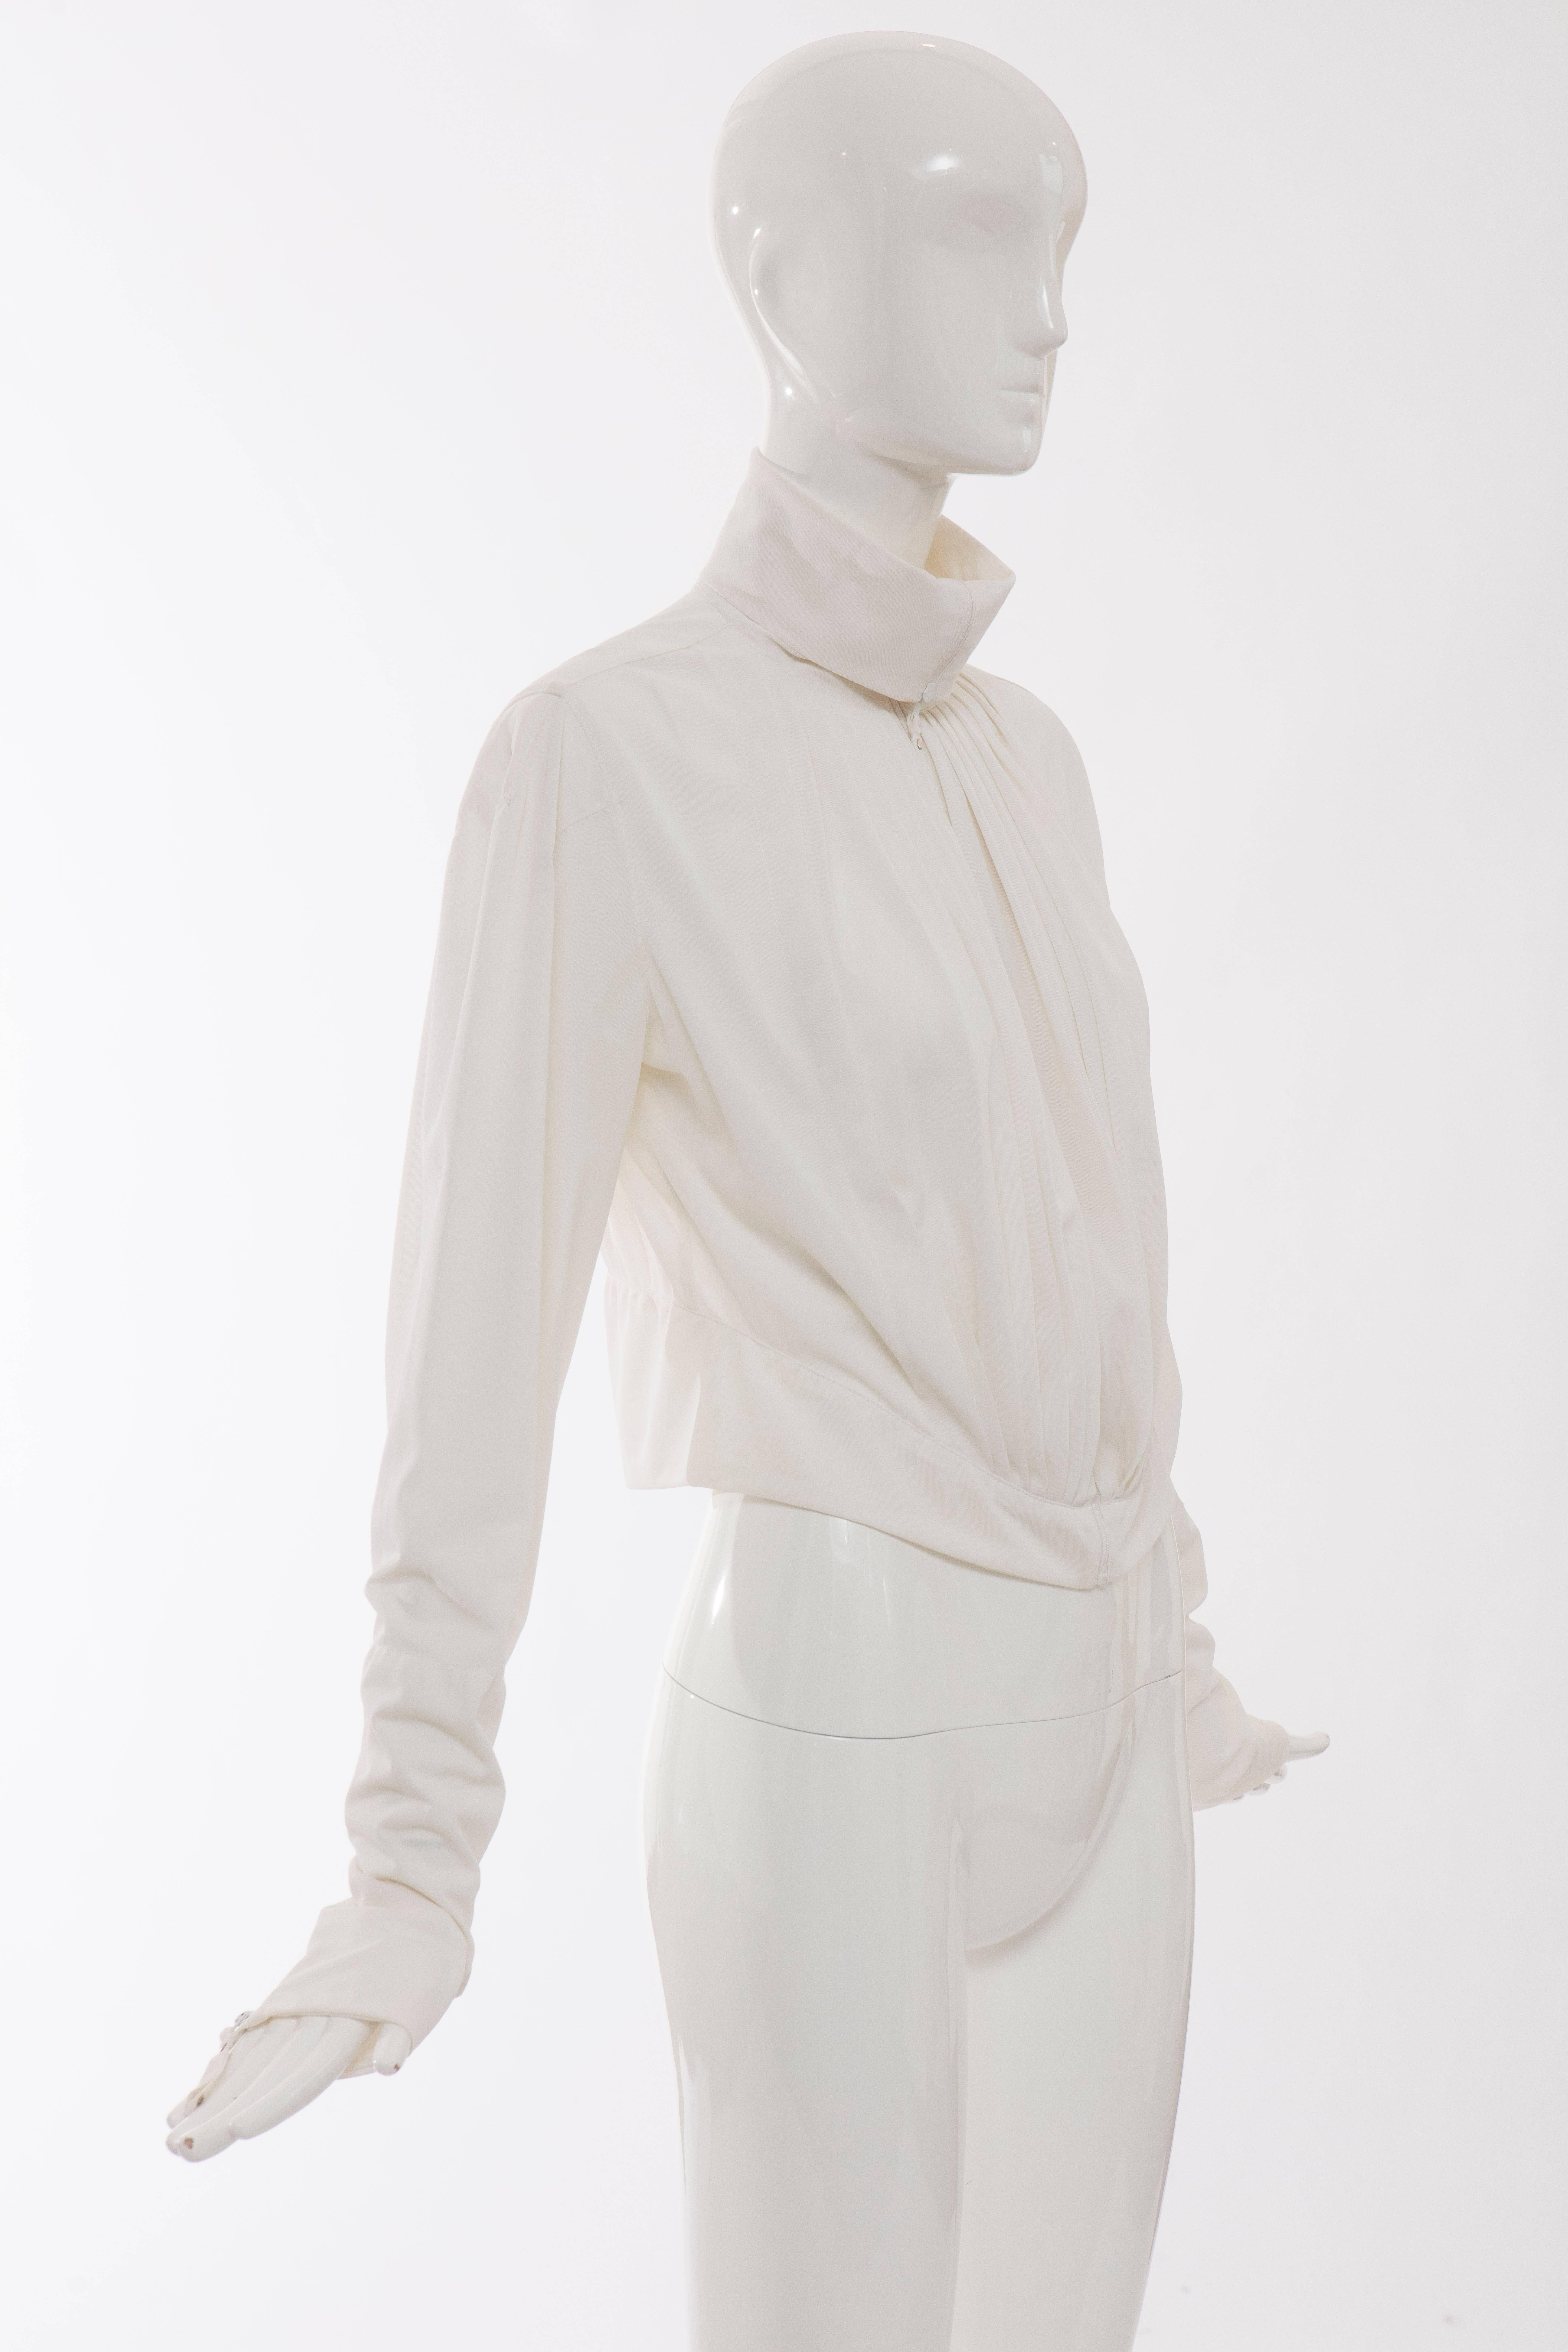 Women's Jean Paul Gaultier White Nylon Zip Front Jacket, Circa 1990s For Sale